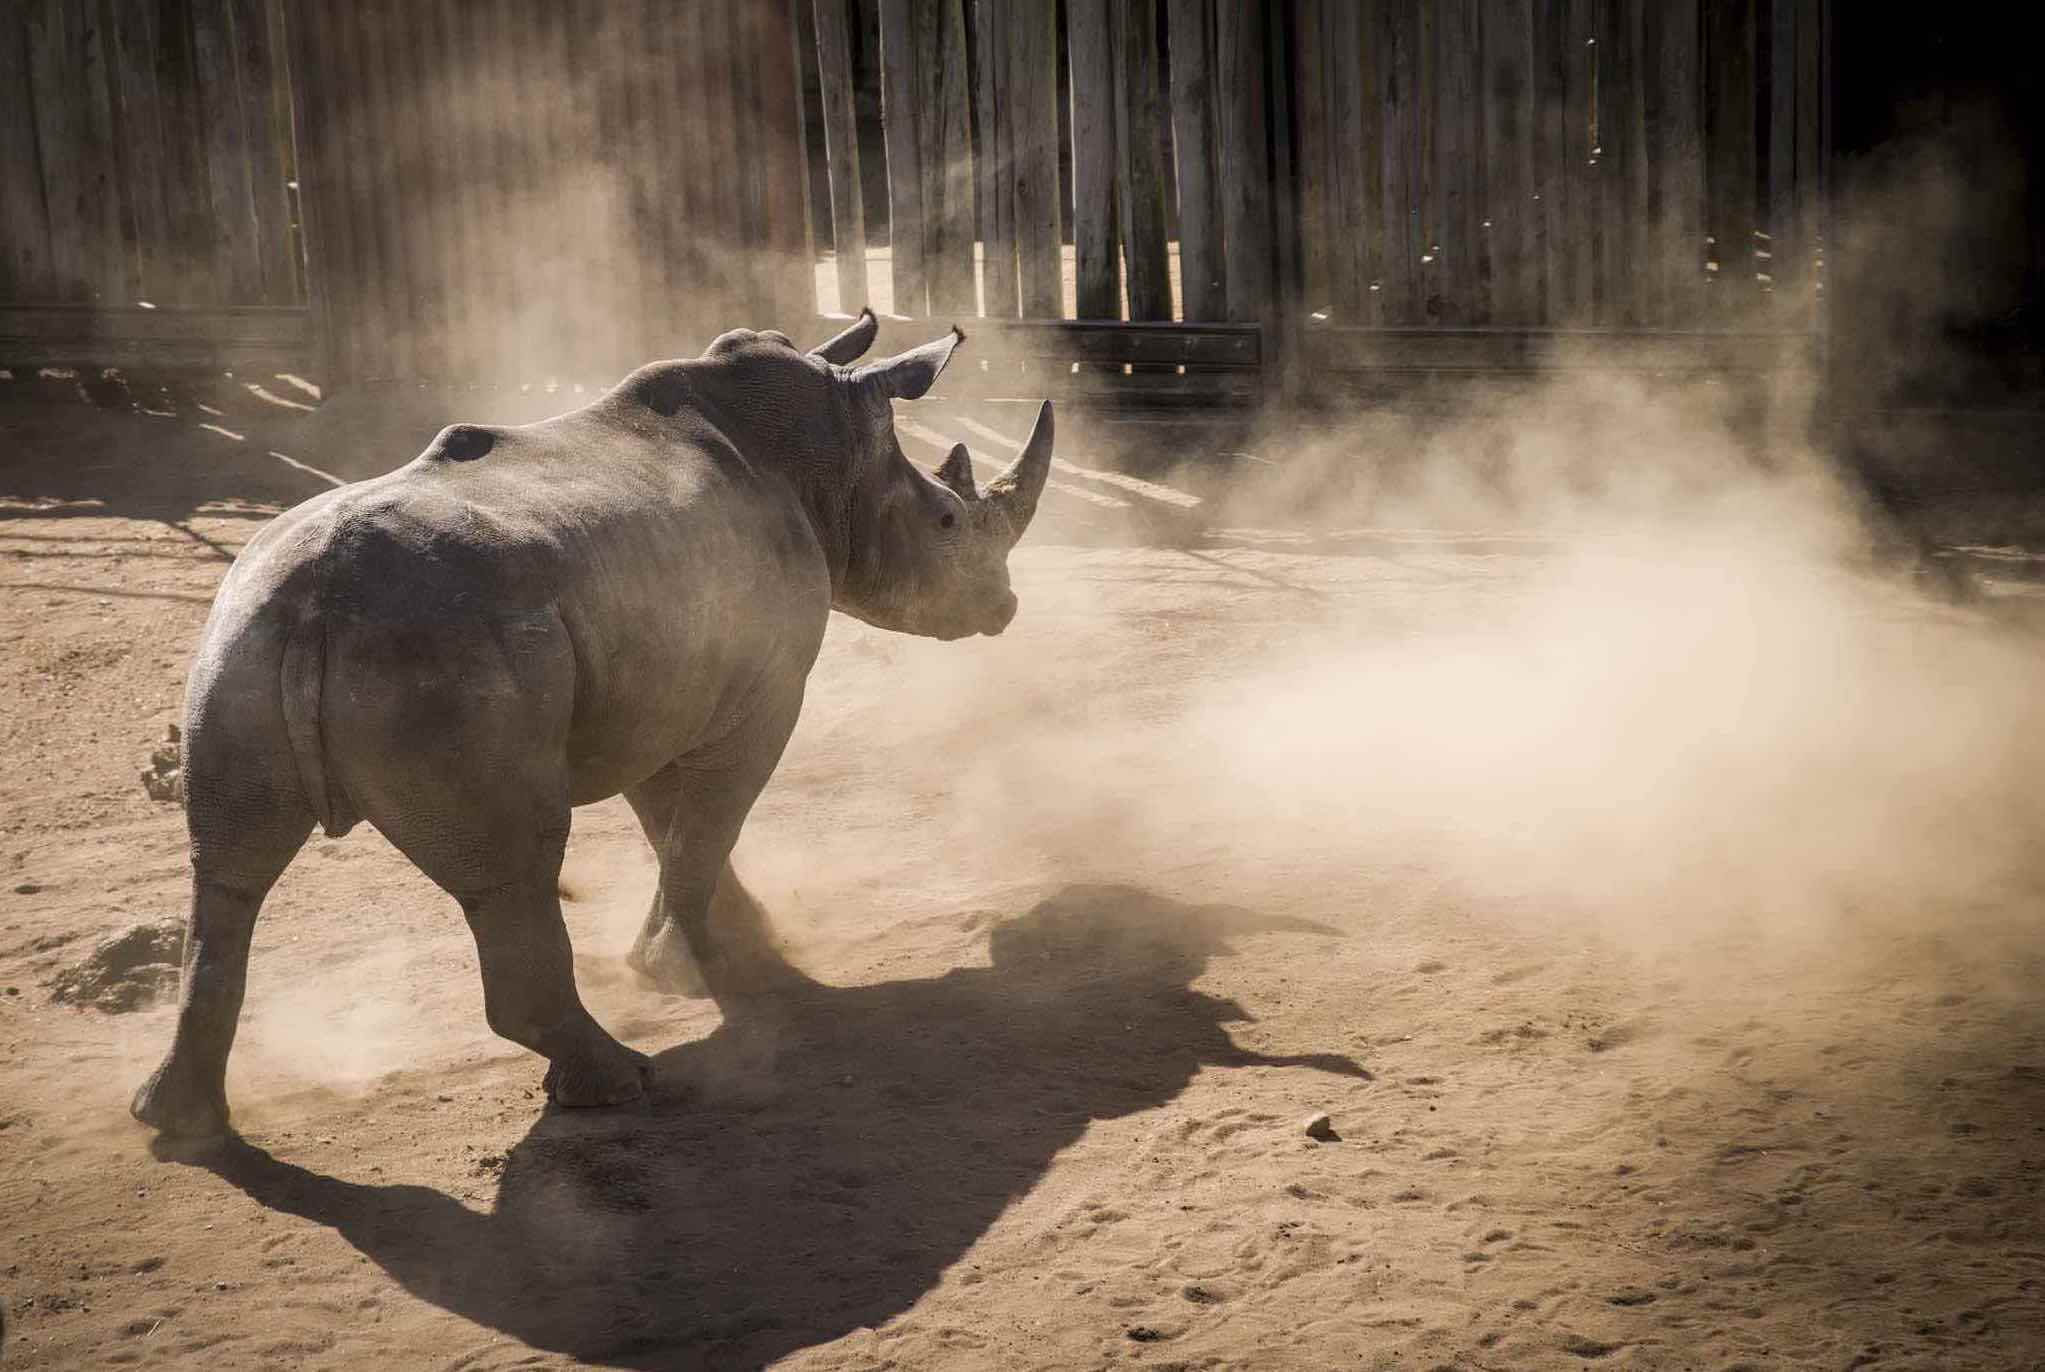 Rhino horn trade will threaten its existence: US wildlife advocate